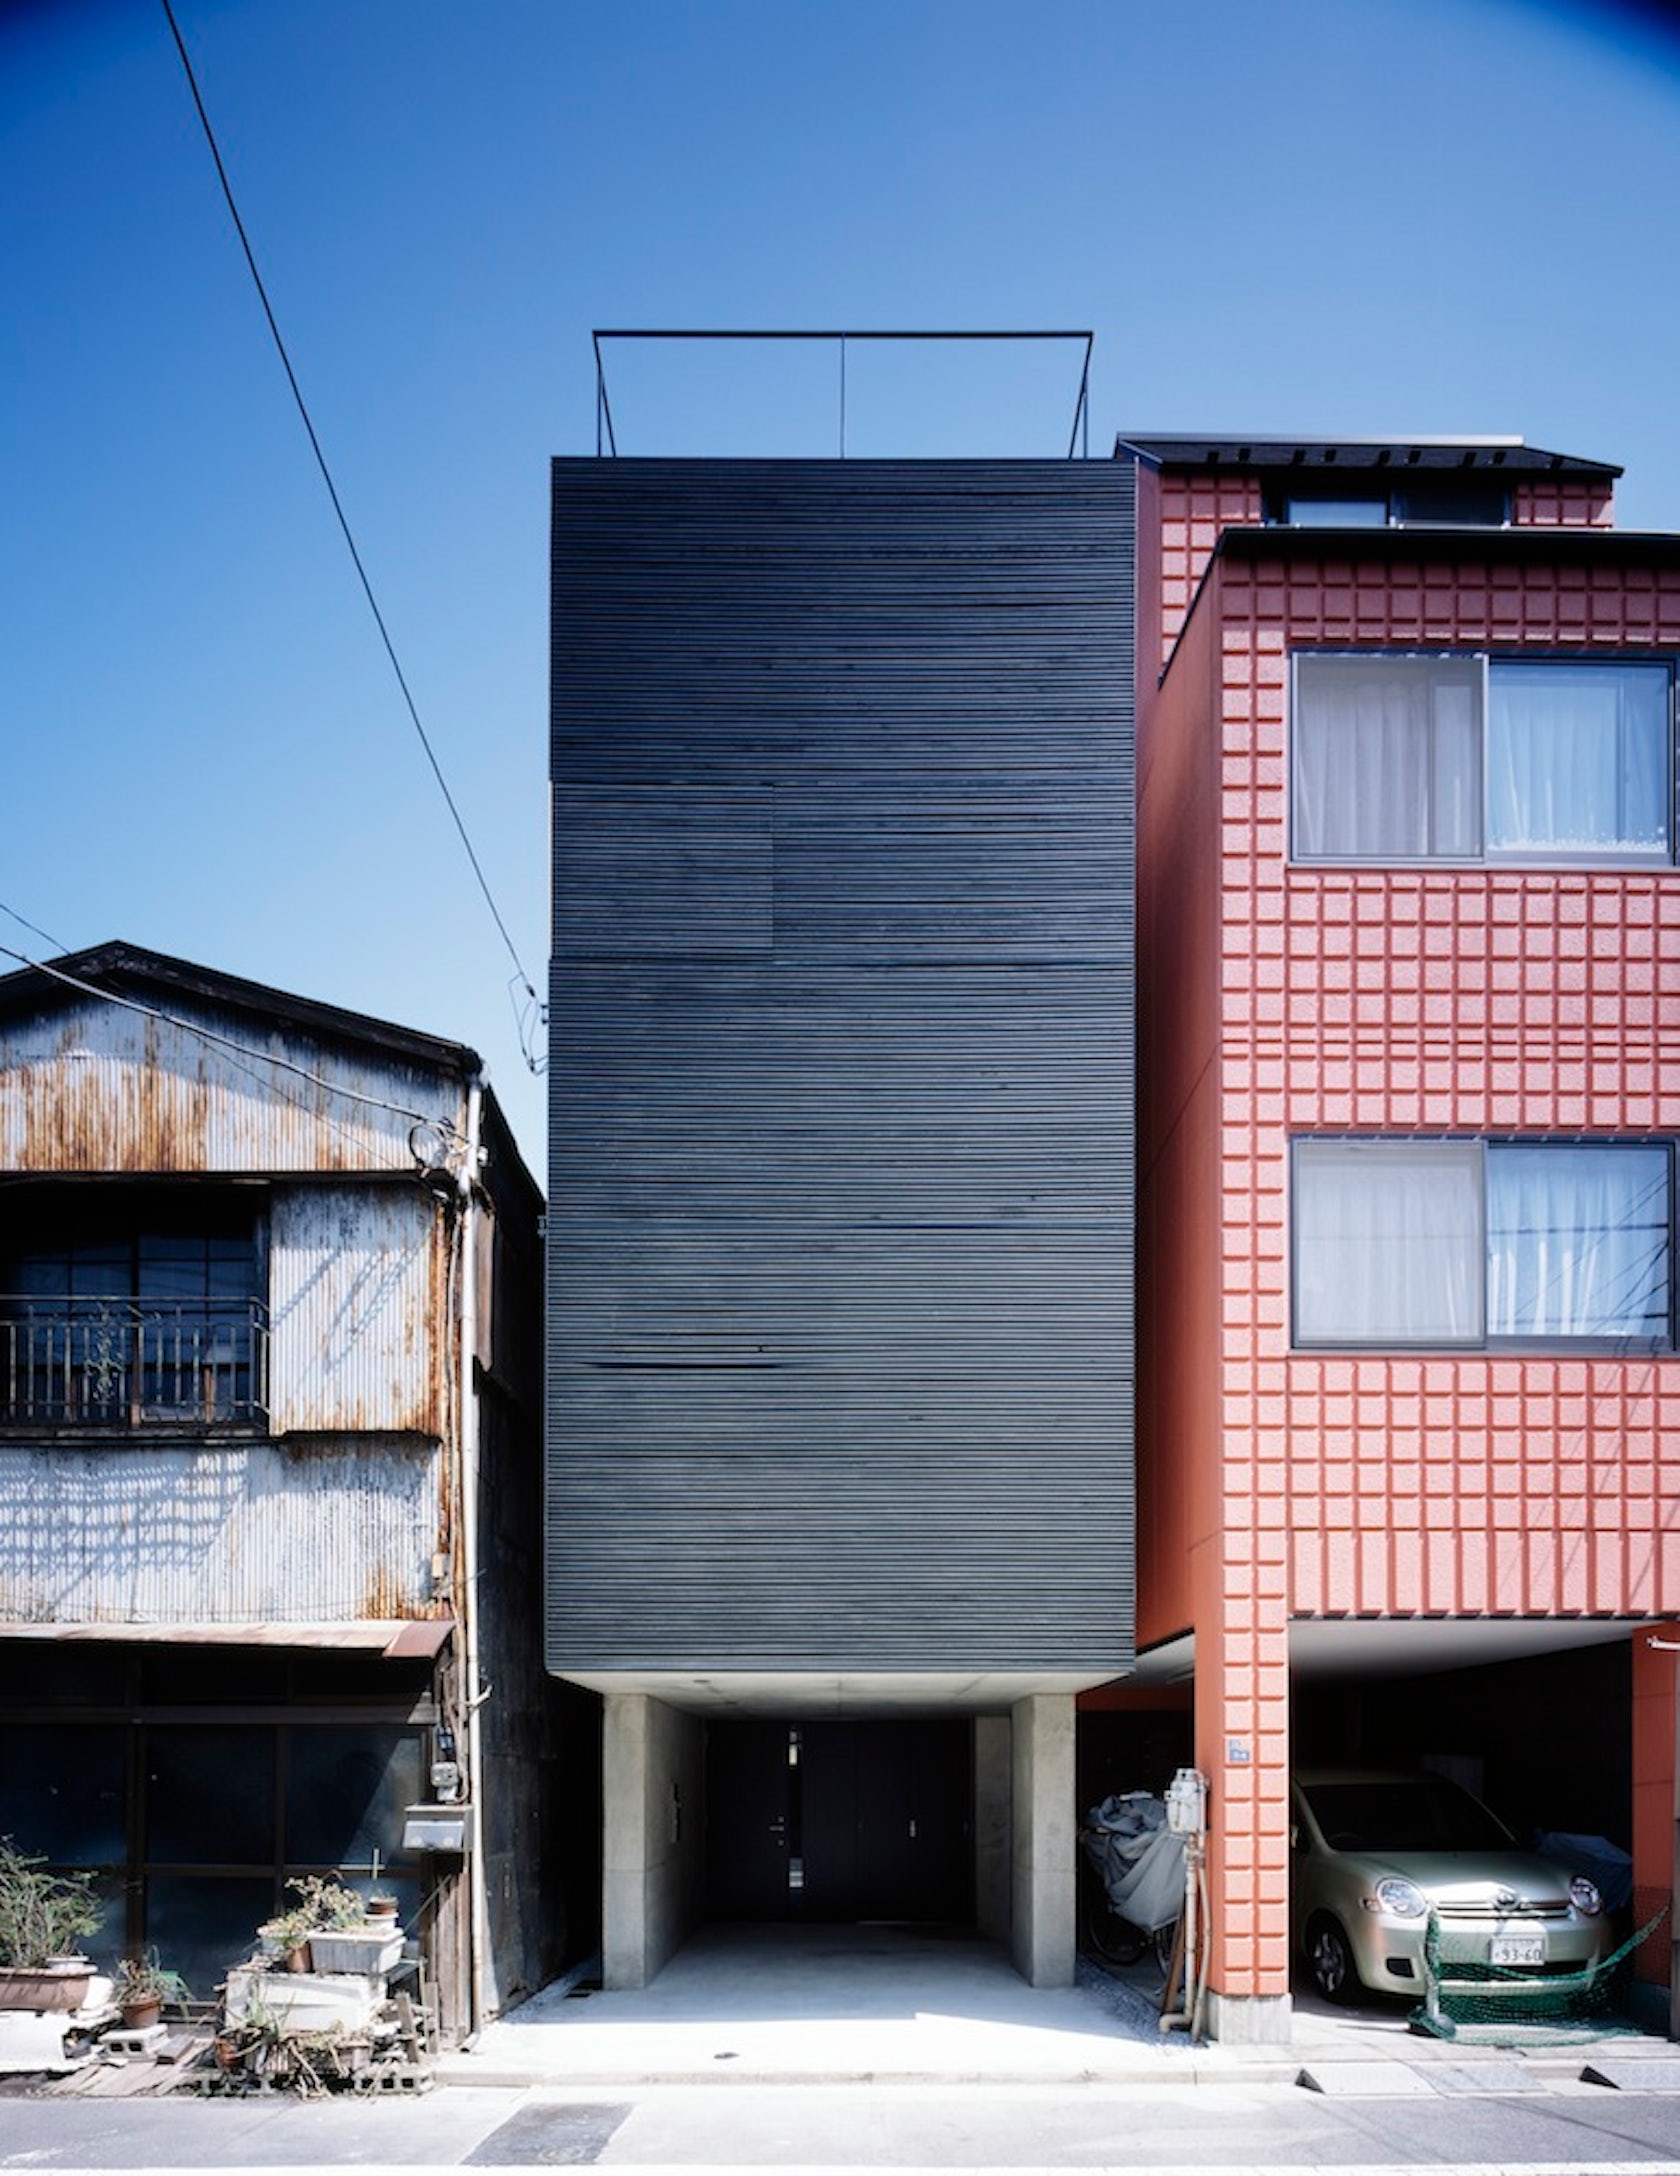 photo: Masao Nishikawa - © Apollo Architects and Associates